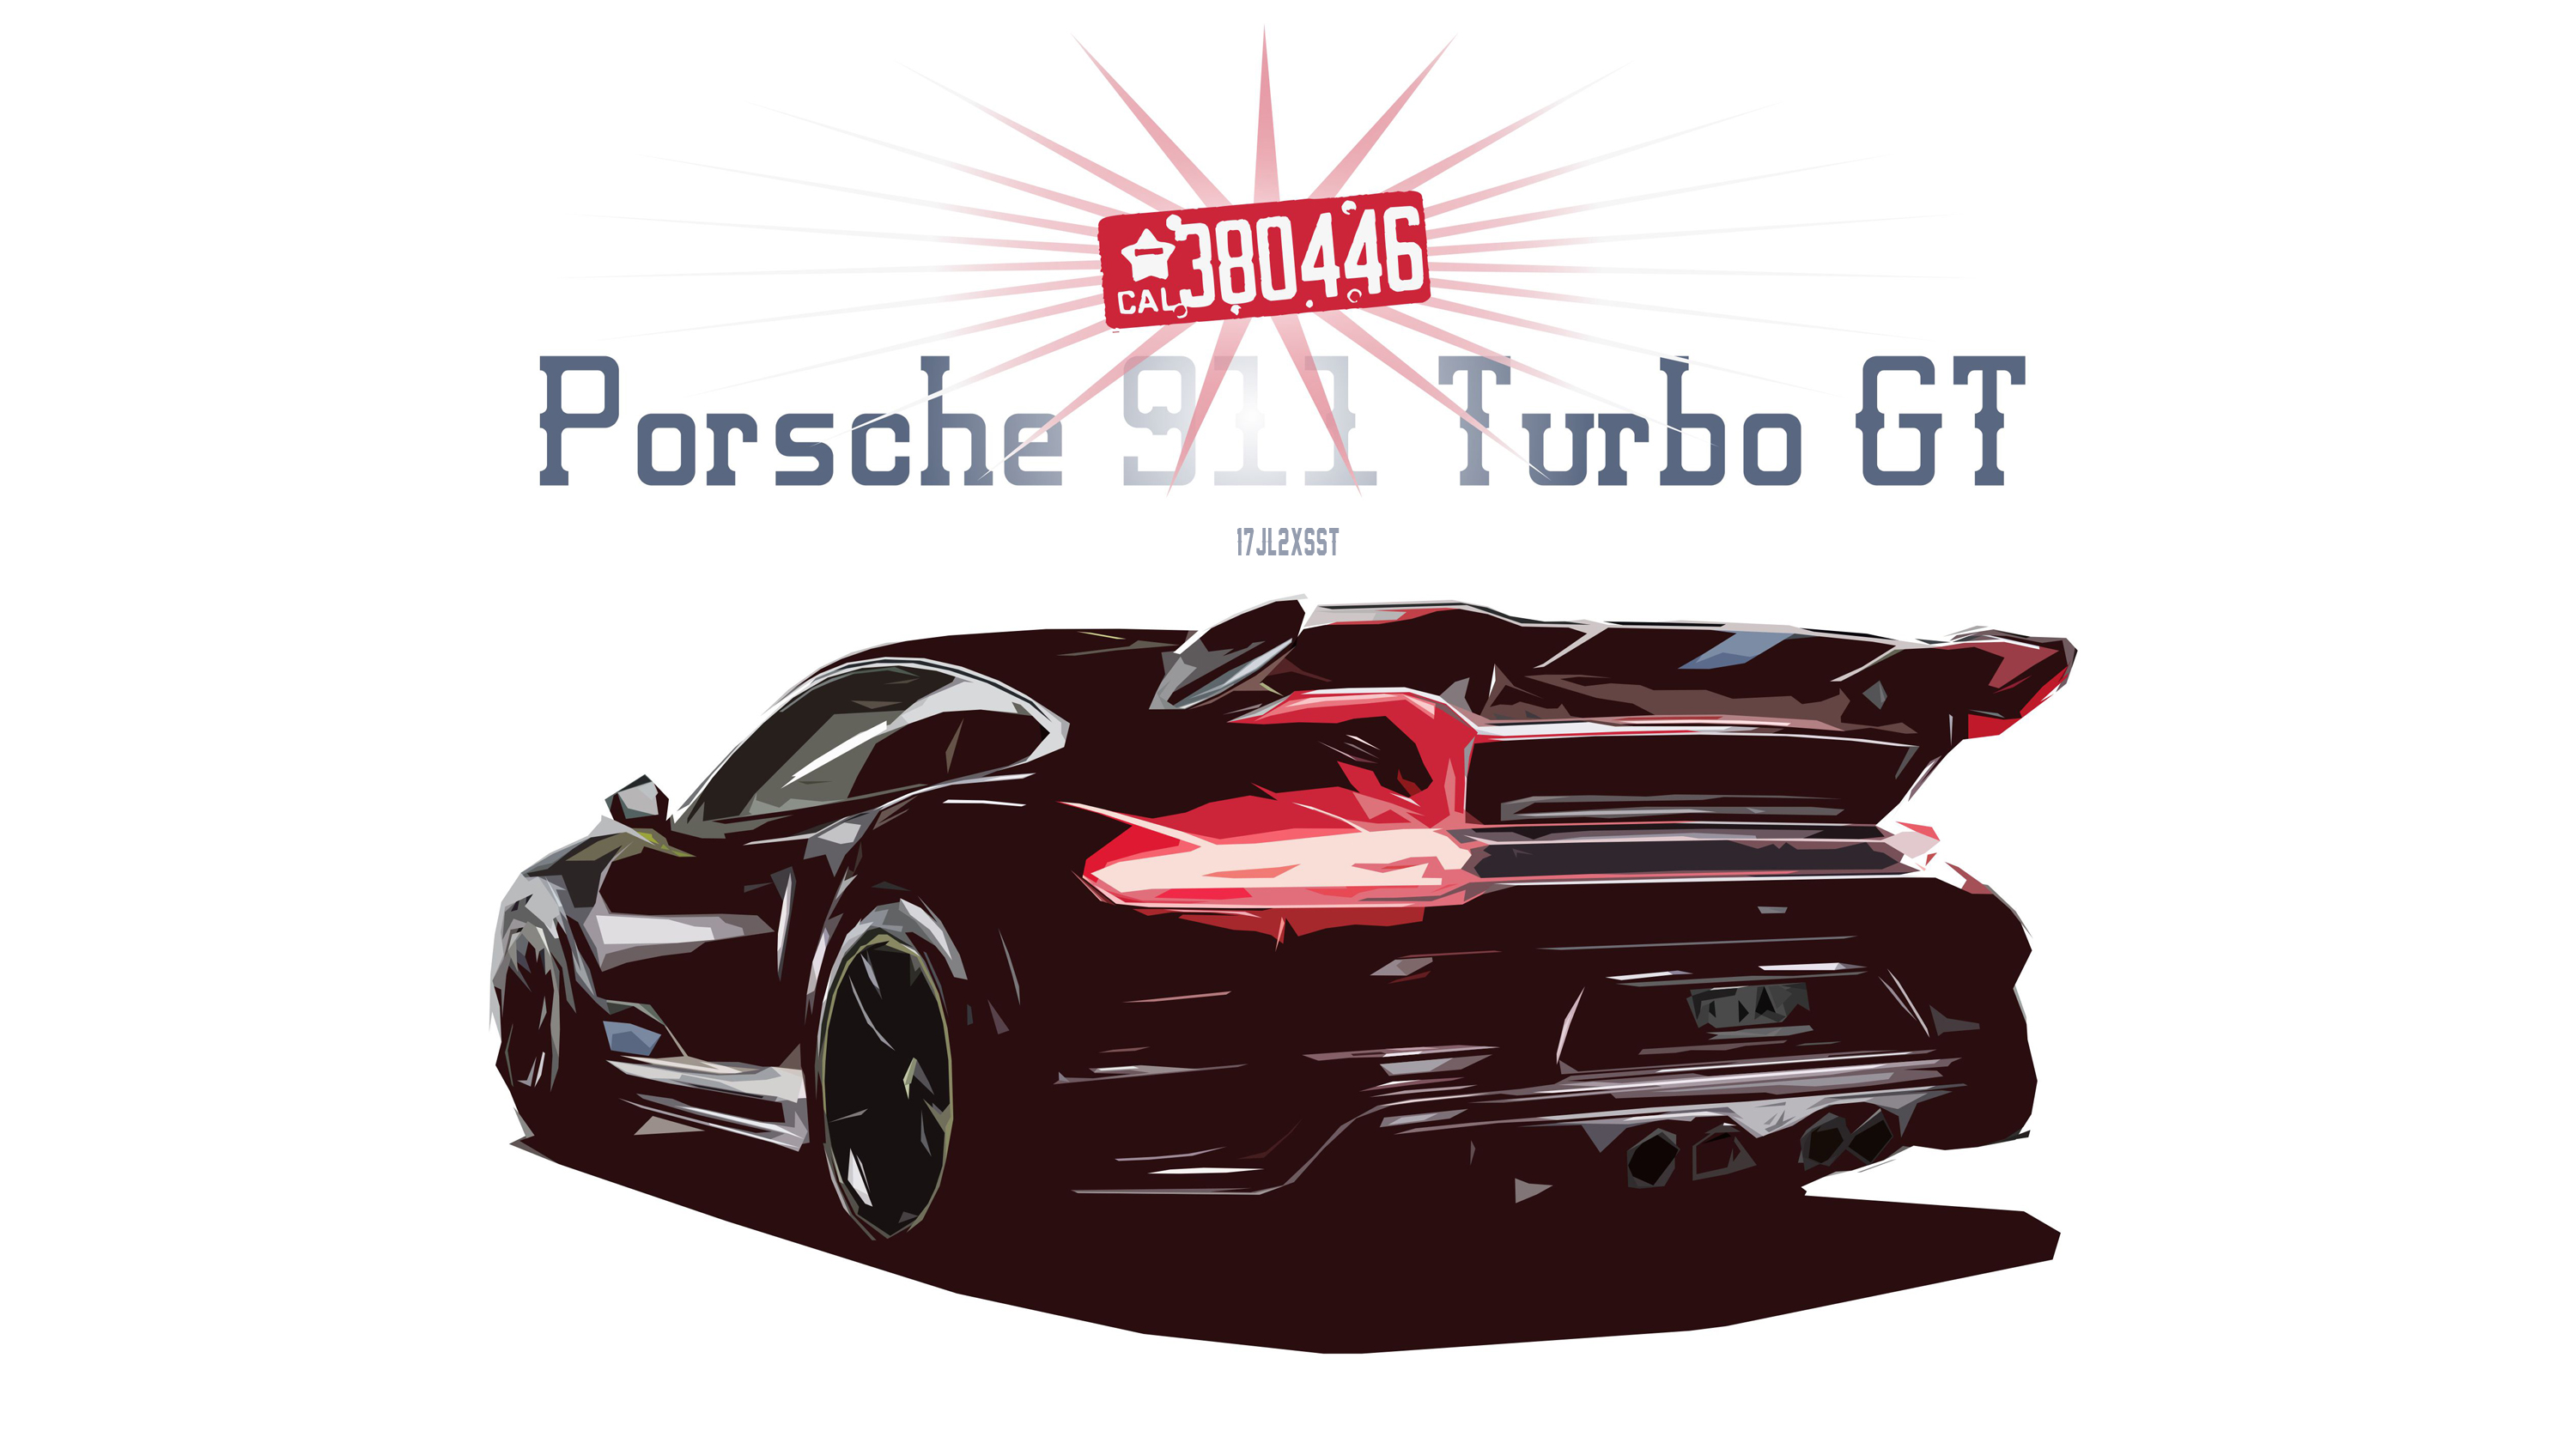 Porsche car | with Anime advertisment | Thomas | Flickr